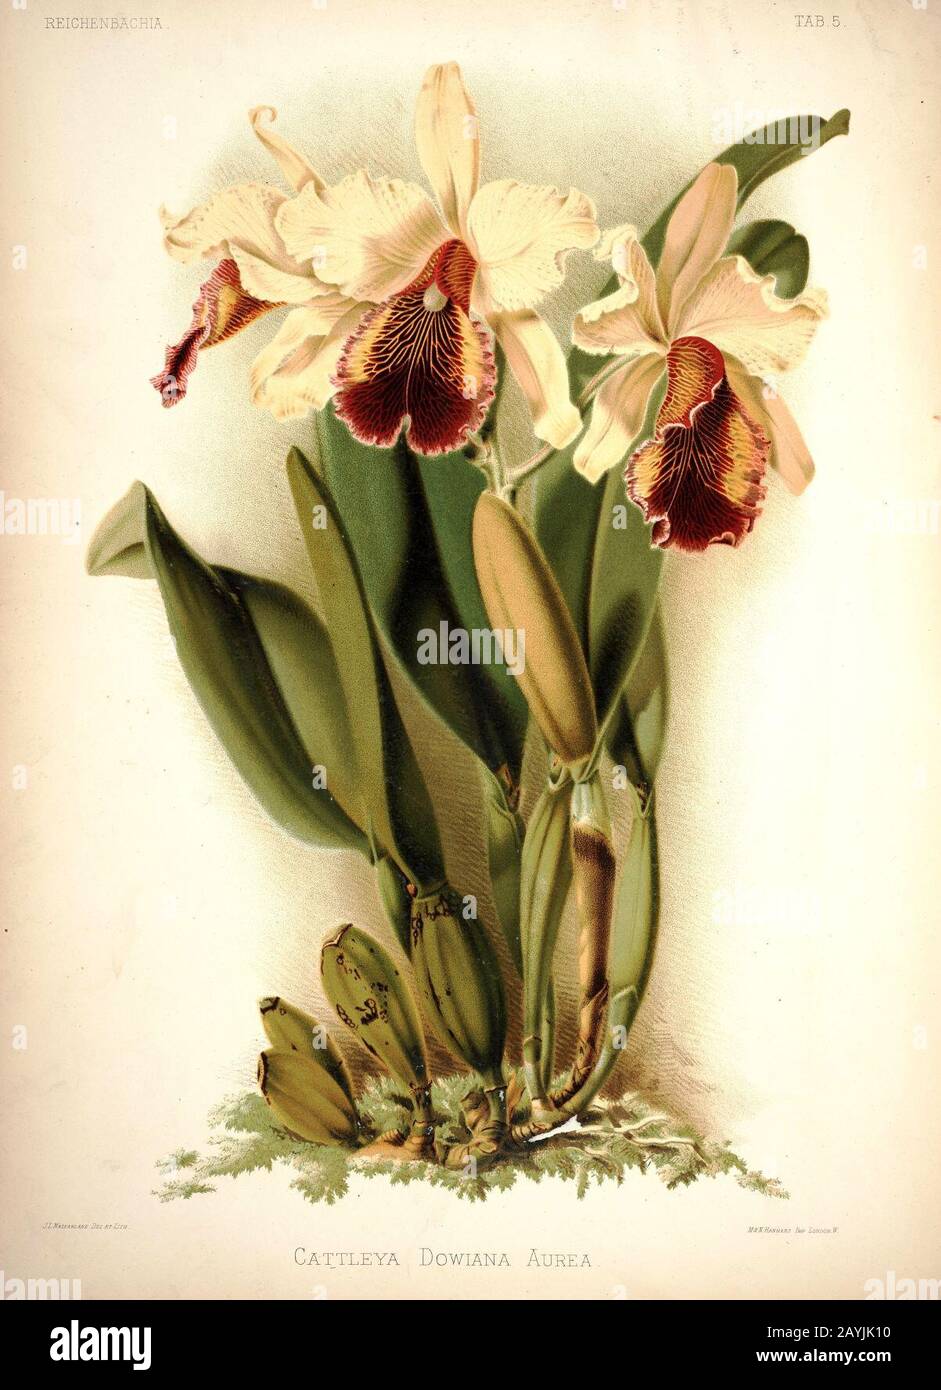 Frederick Sander - Reichenbachia I plate 05 (1888) - Cattleya dowiana aurea. Stock Photo